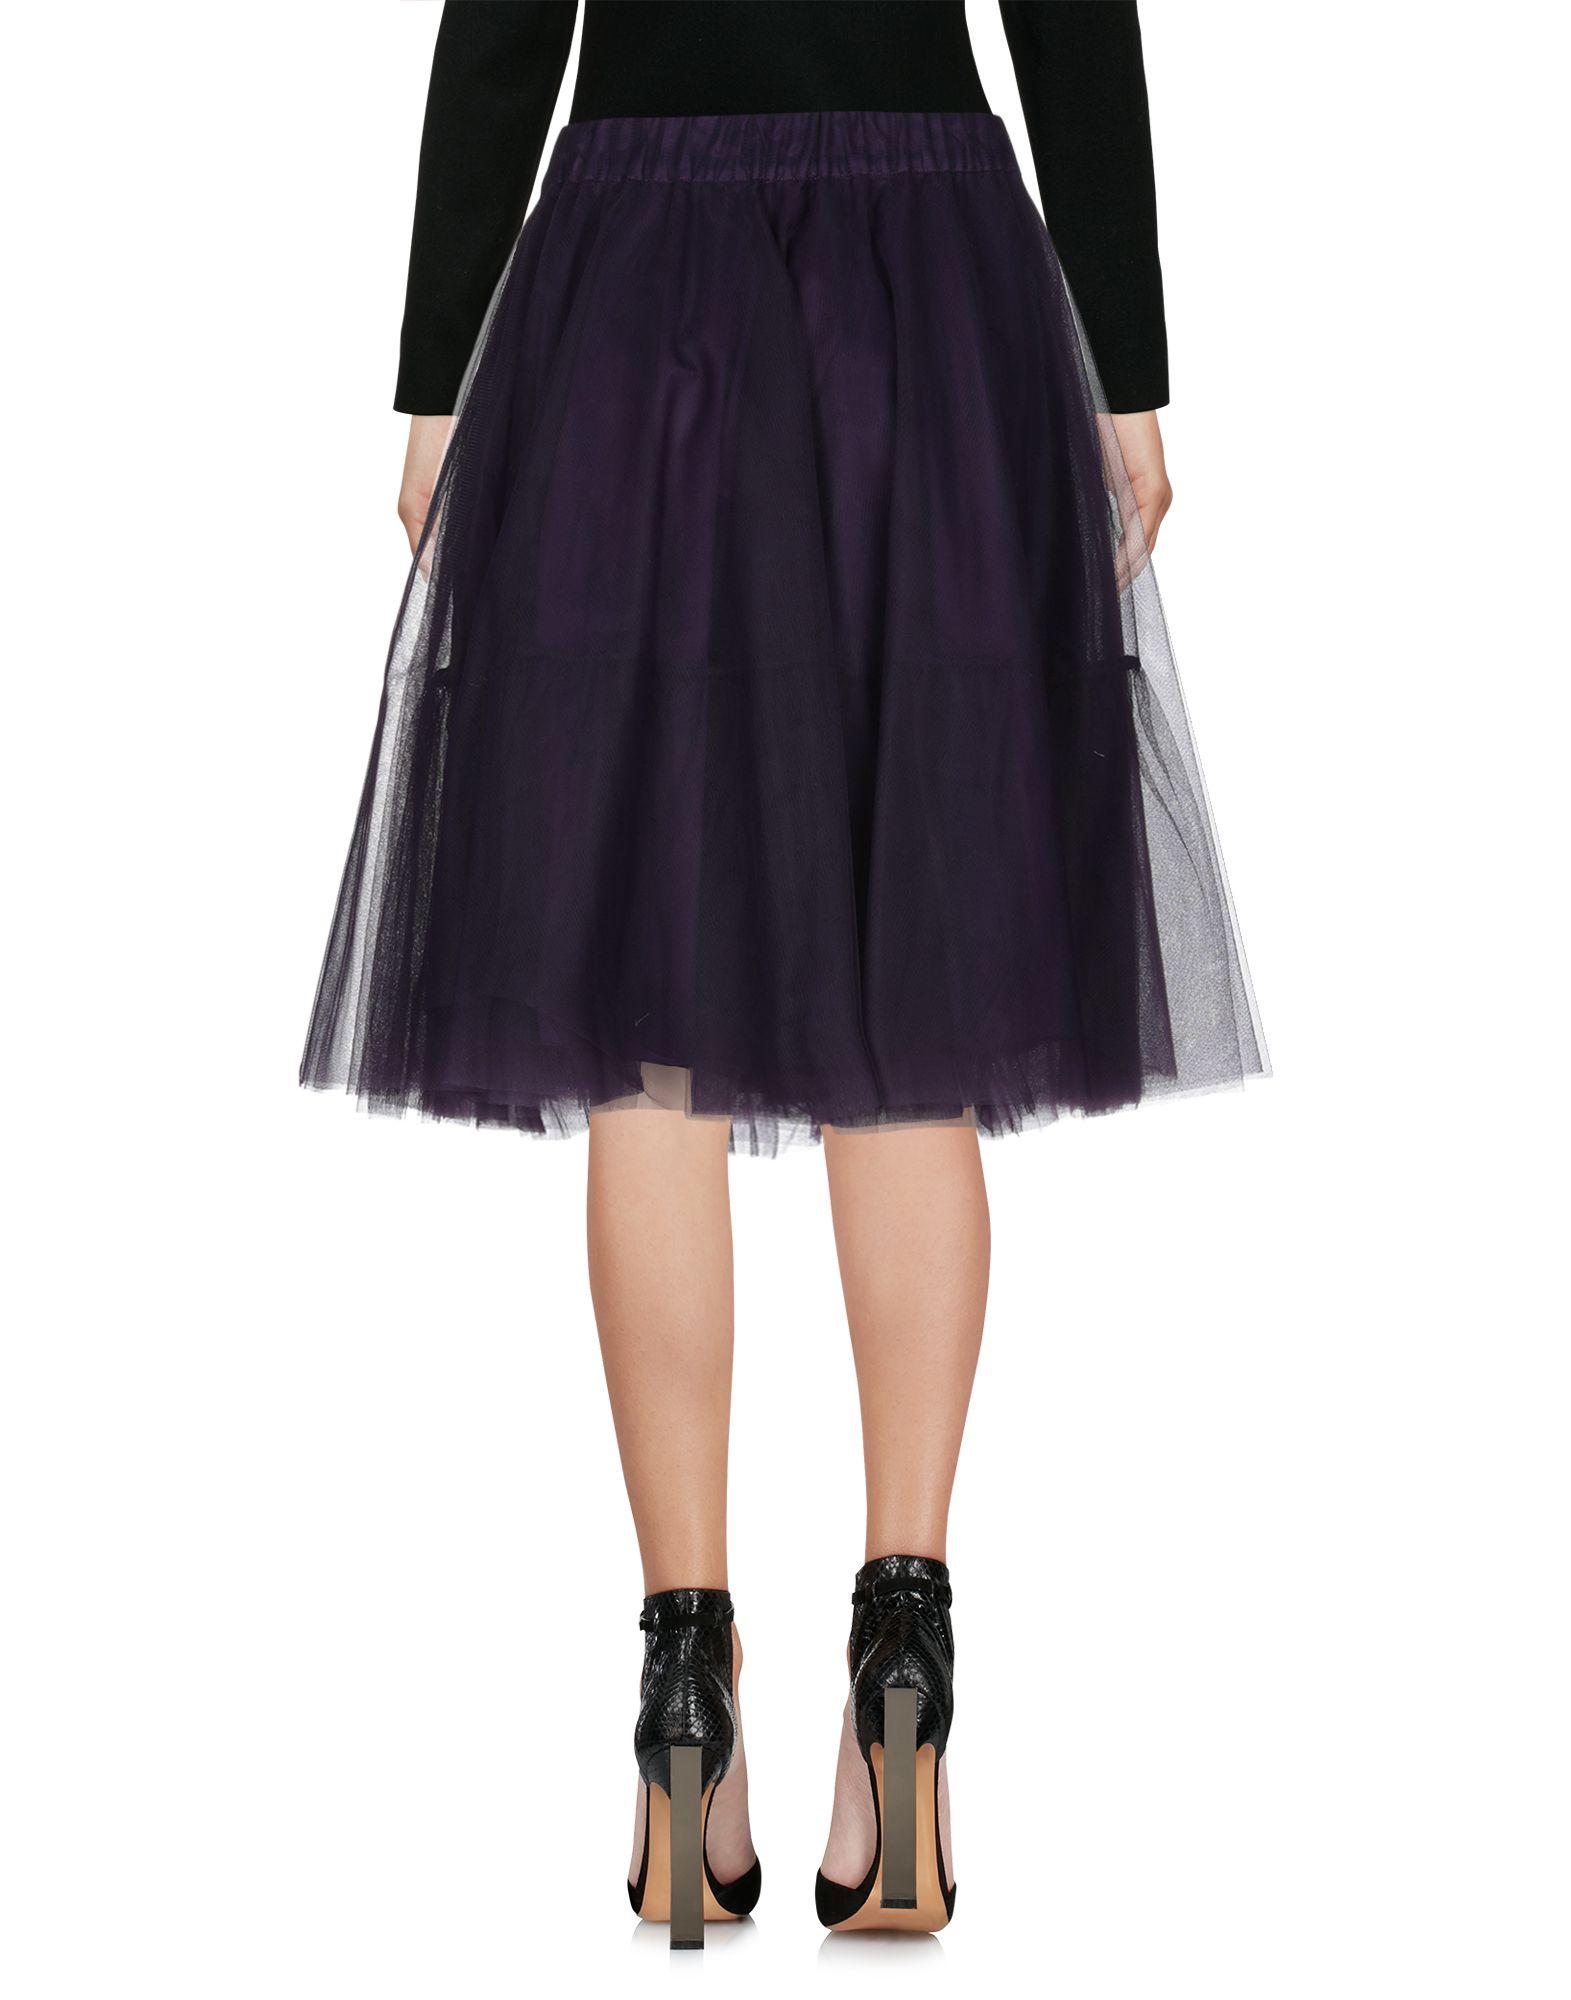 P.A.R.O.S.H. Tulle Knee Length Skirt in Dark Purple (Purple) - Lyst